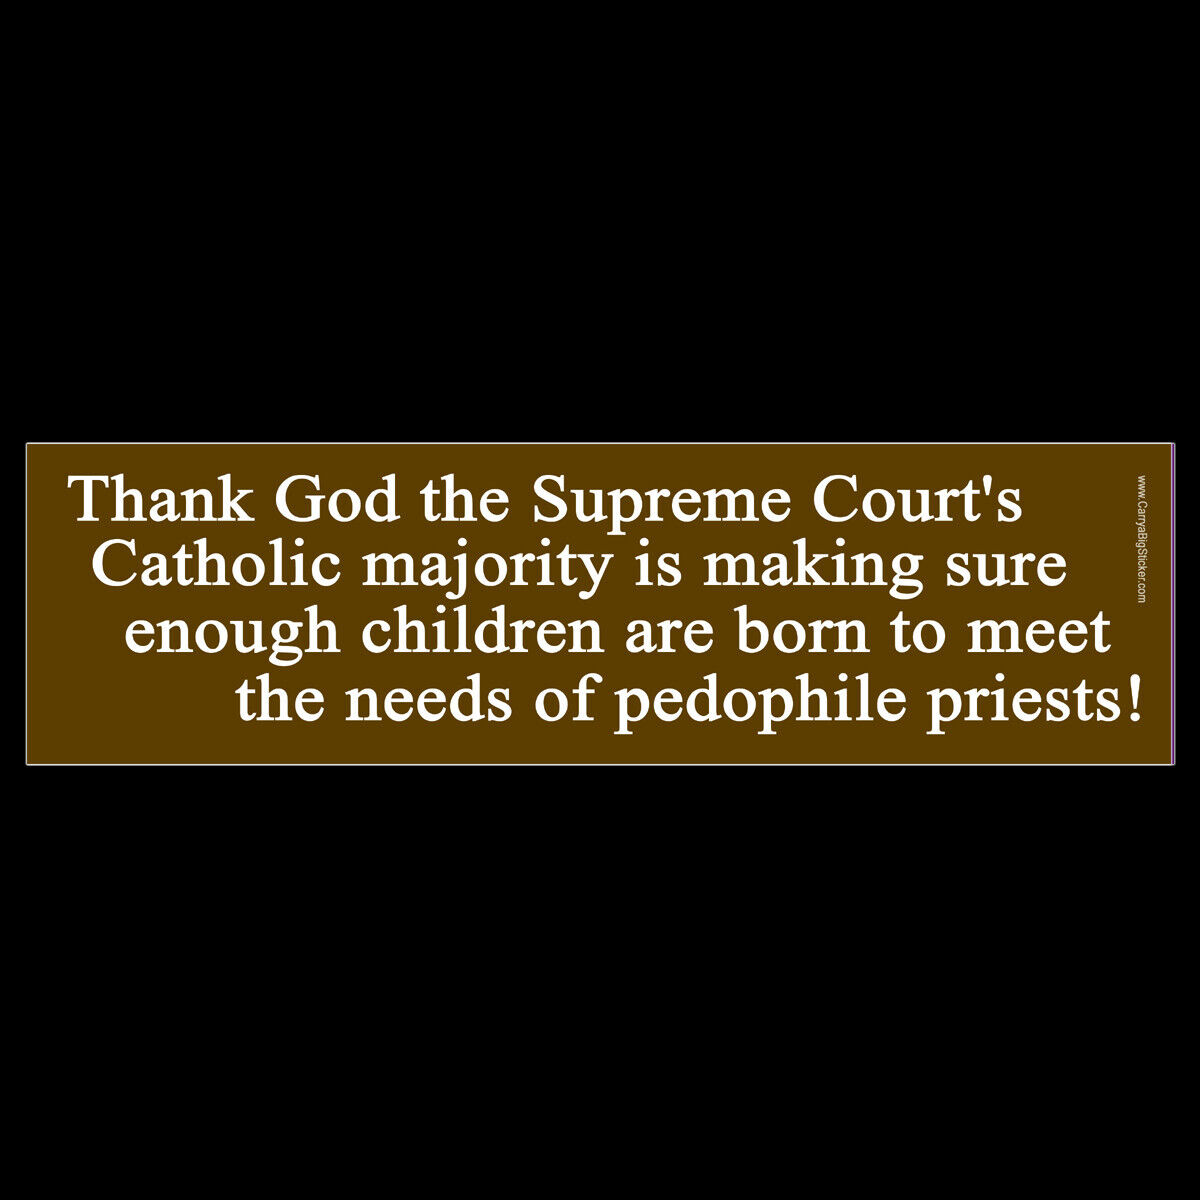 Funny Pro-Choice Anti-Supreme Court BUMPER STICKER abortion decal humorous